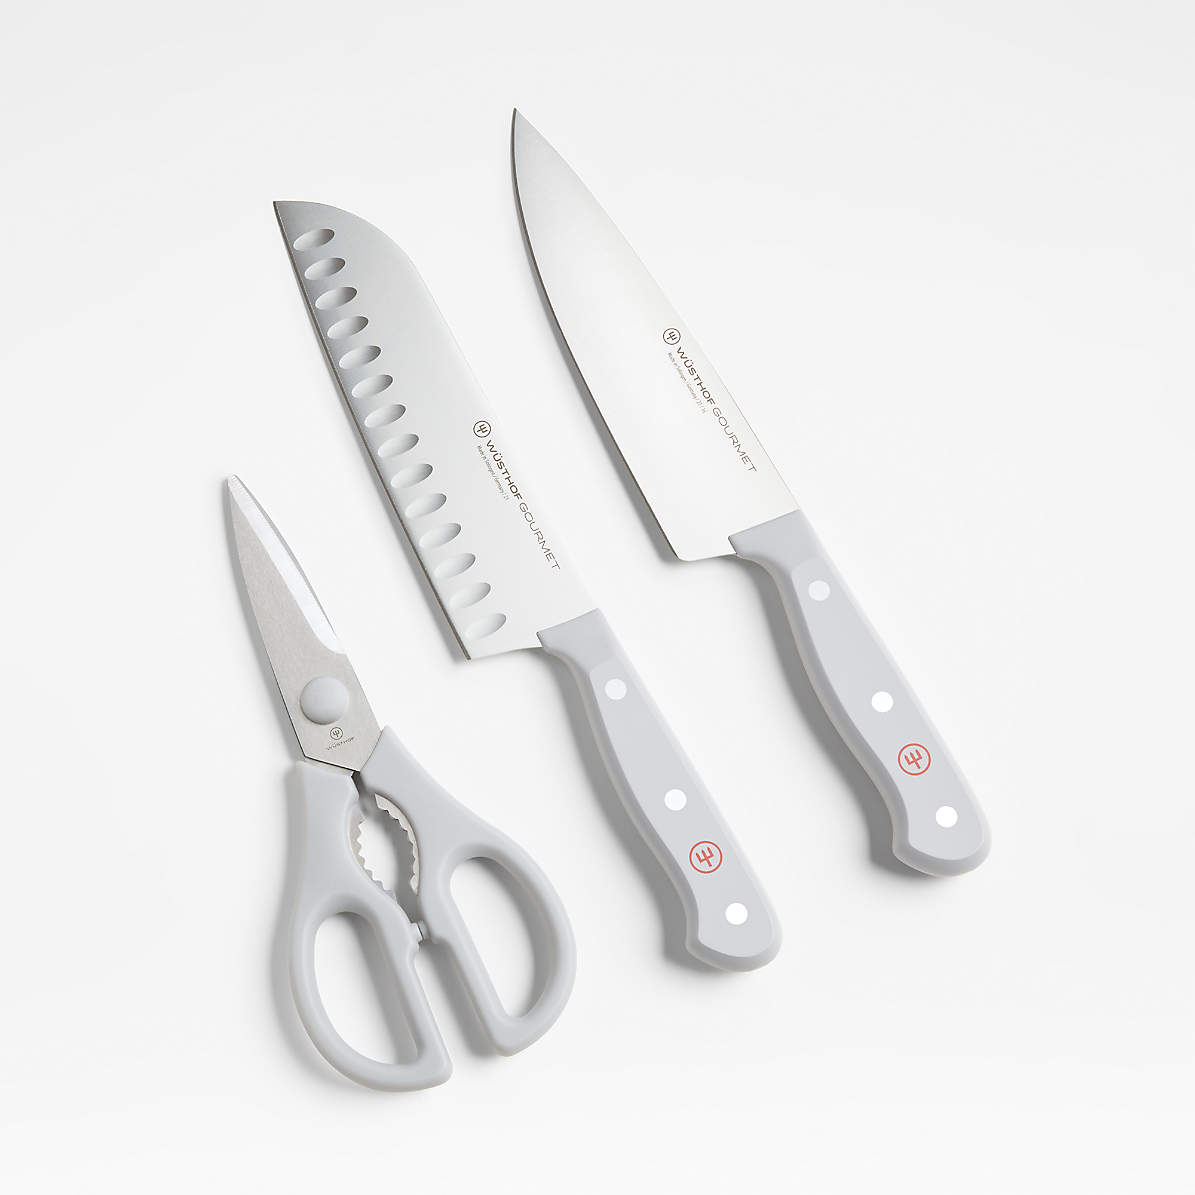 Wusthof Gourmet 2-Piece Paring Knife & Shears Set